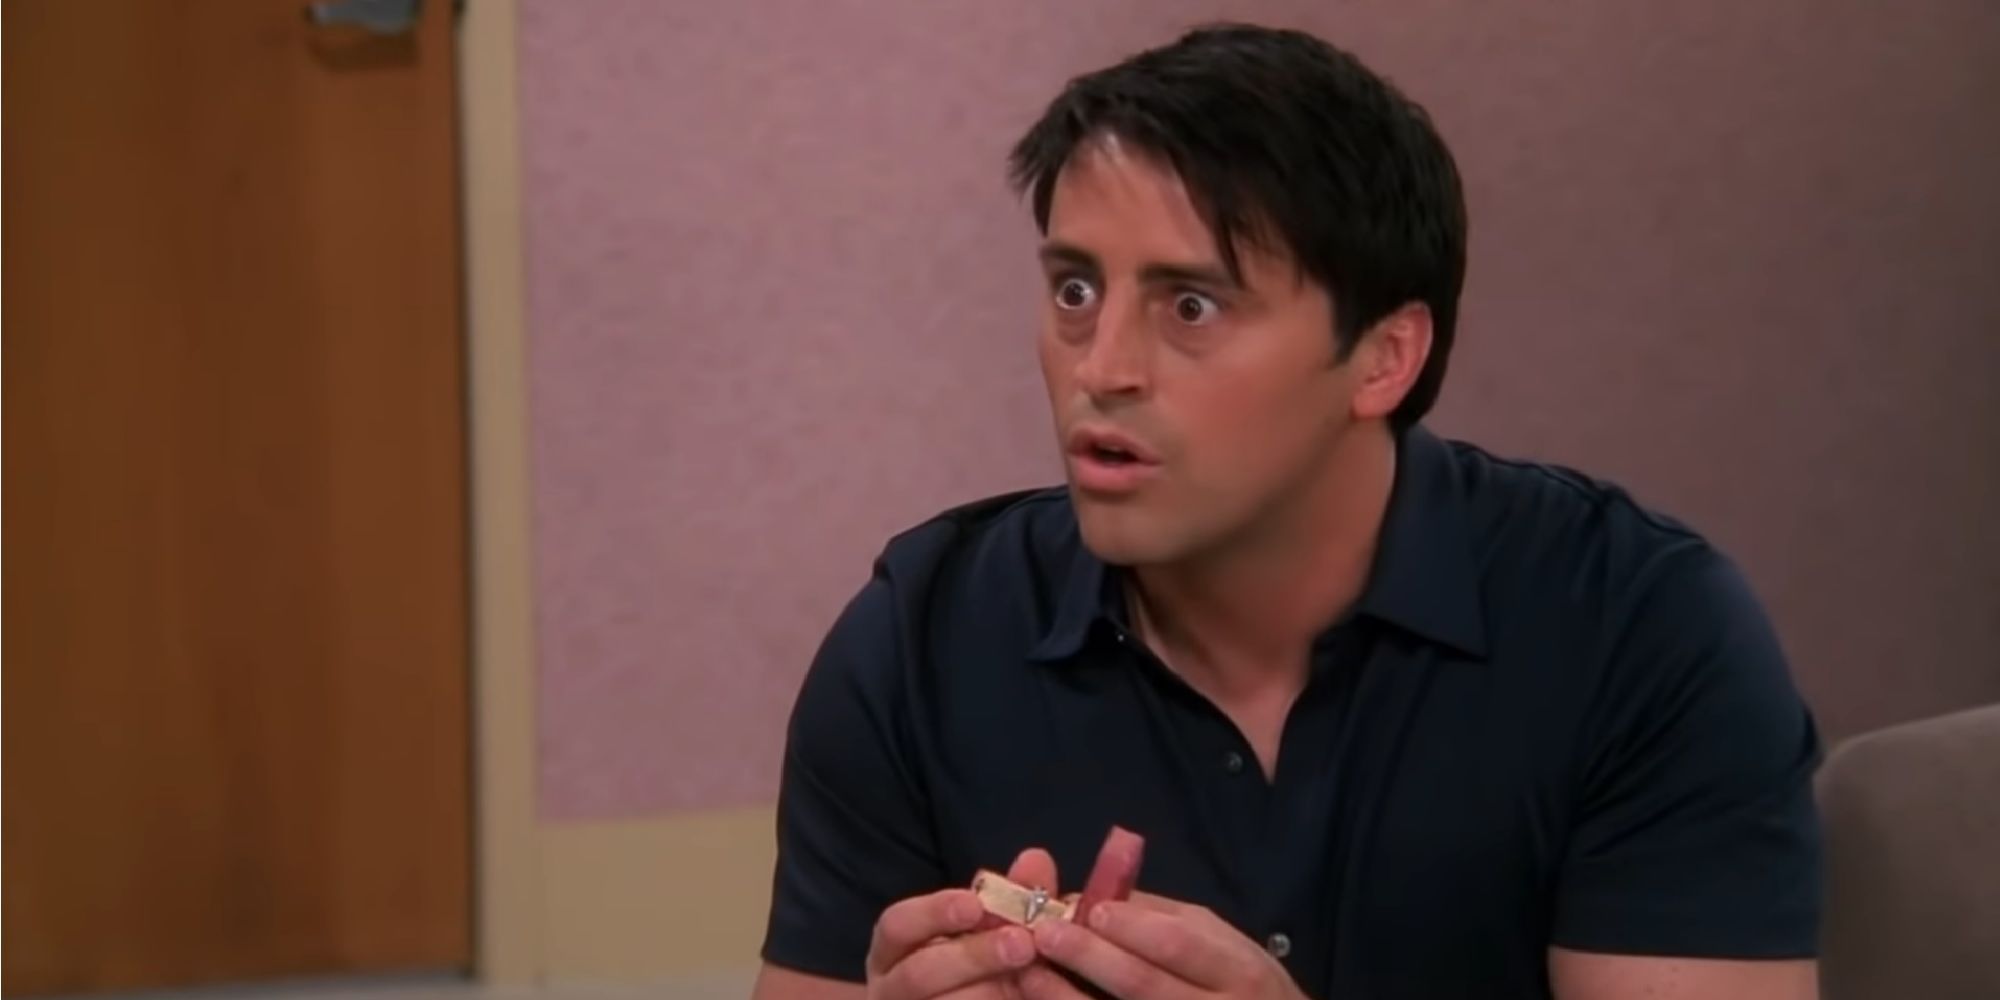 Joey accidentally proposing to Rachel